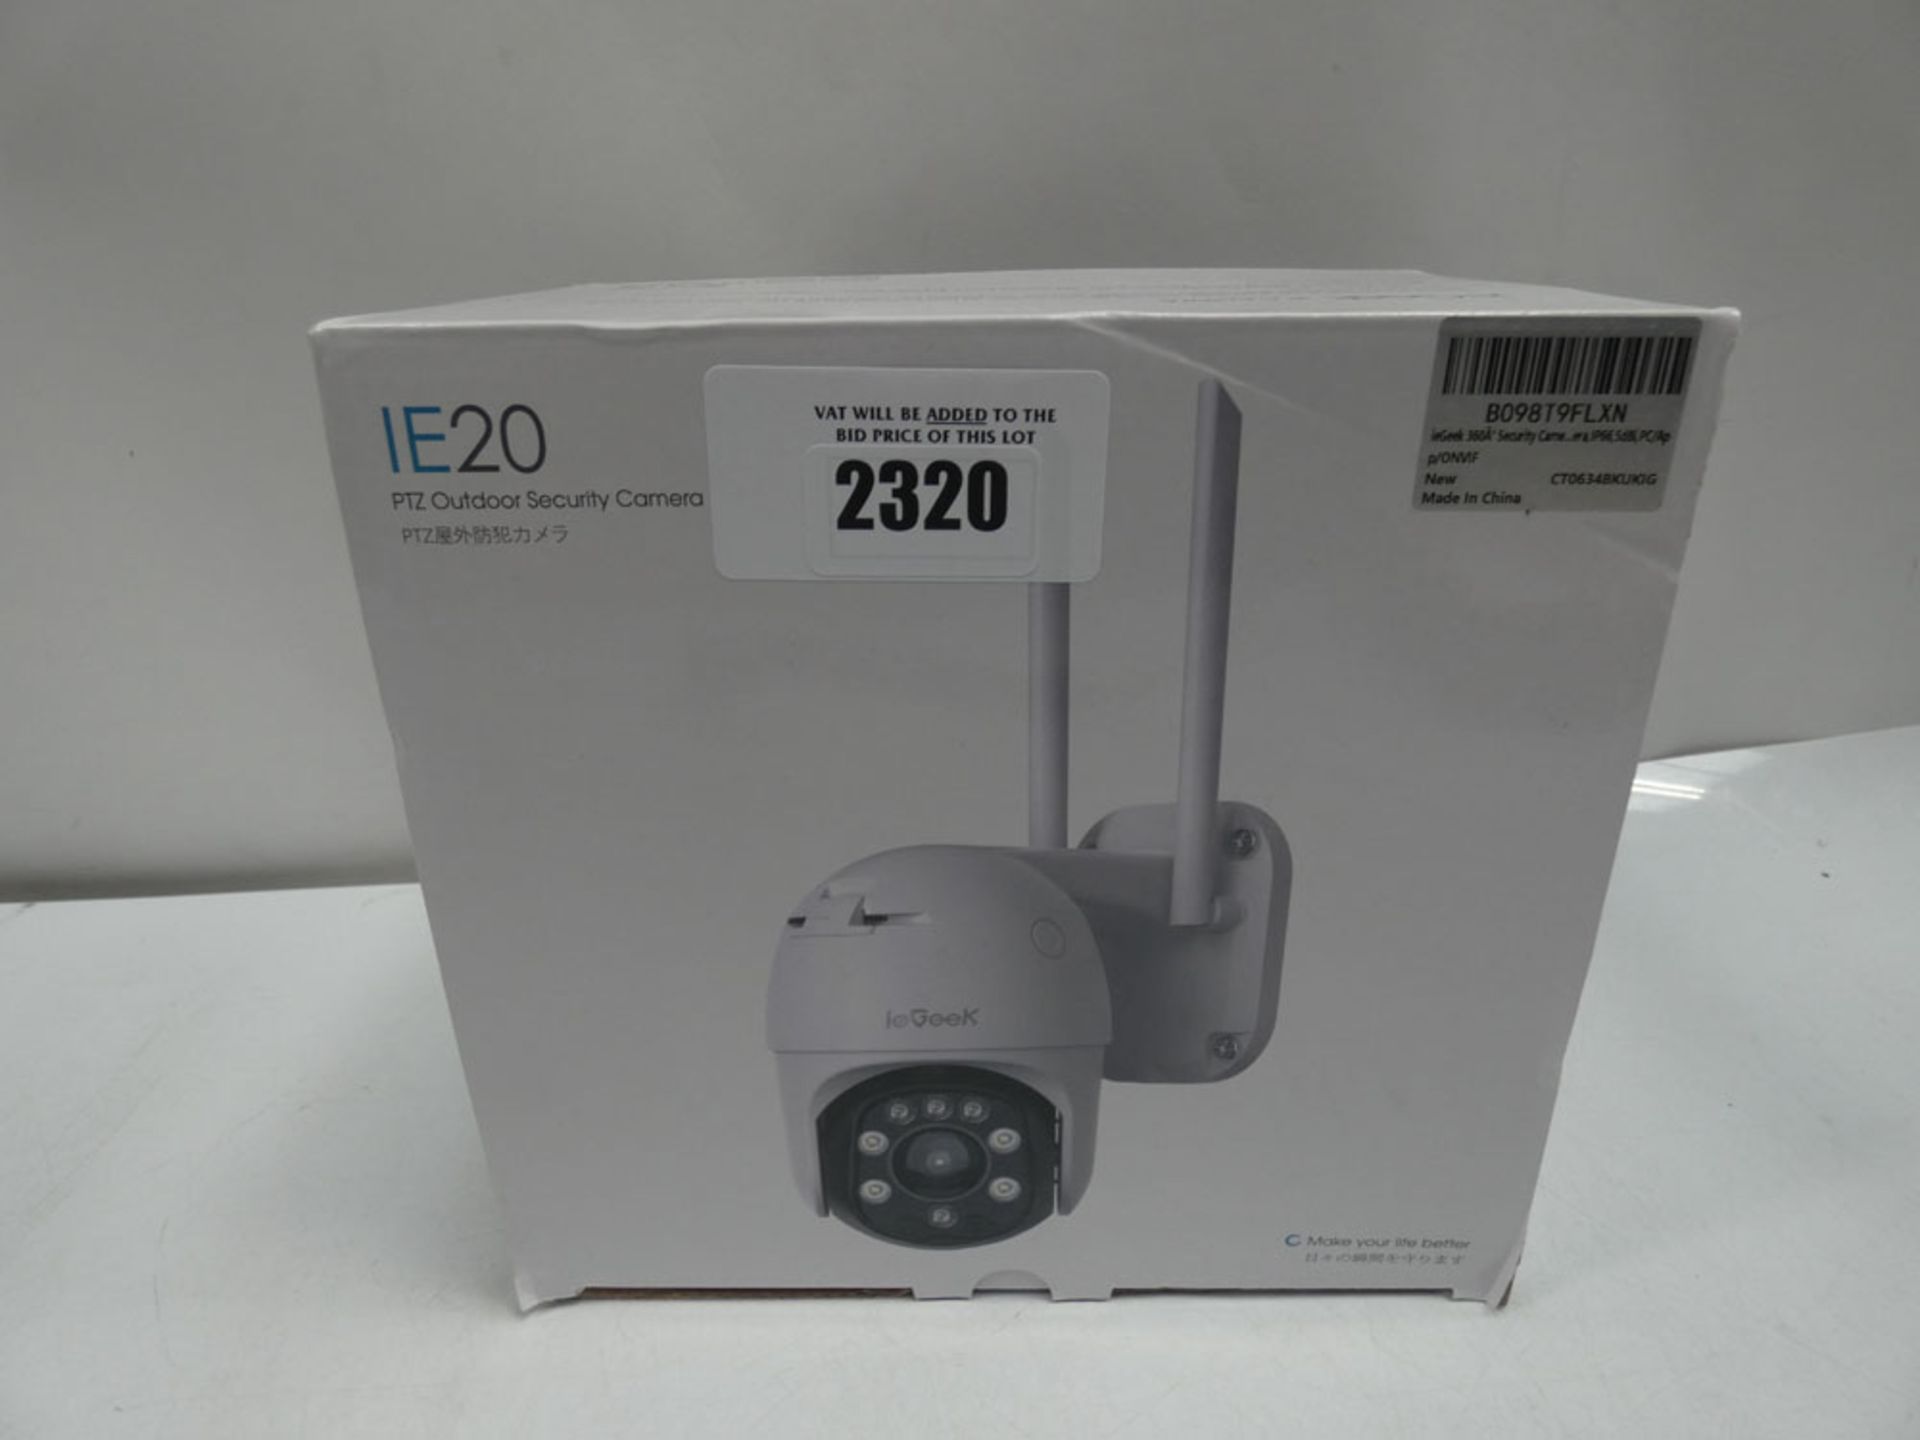 IE20 PTZ outdoor security camera